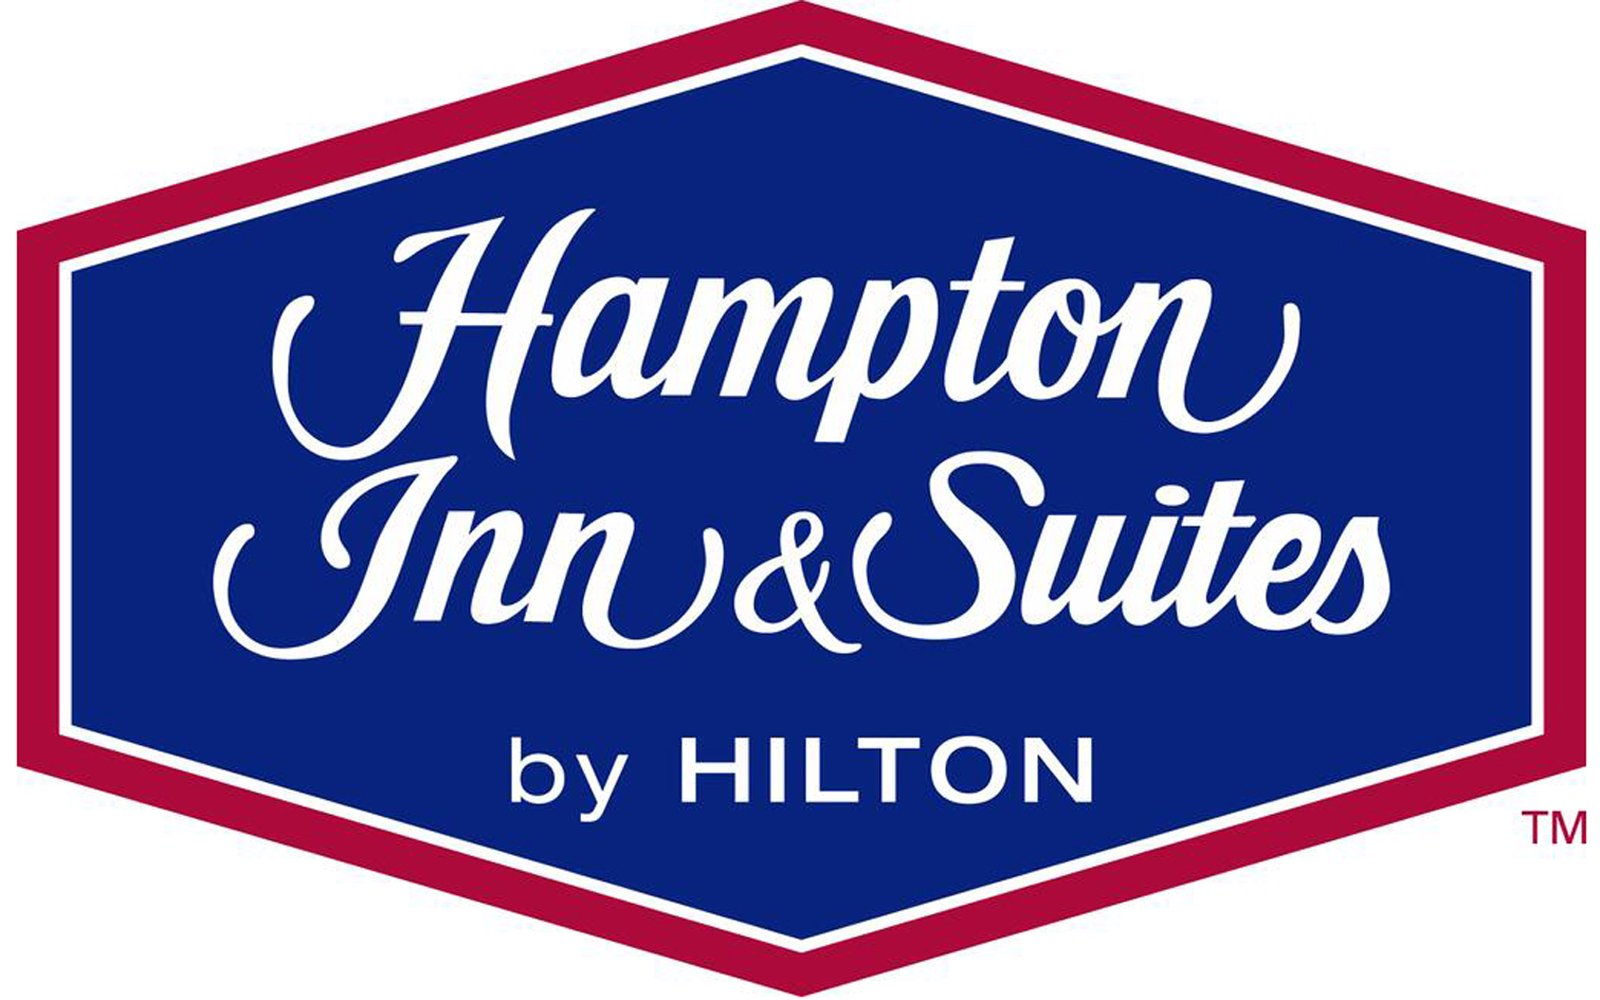 Hampton Inn and suites logo